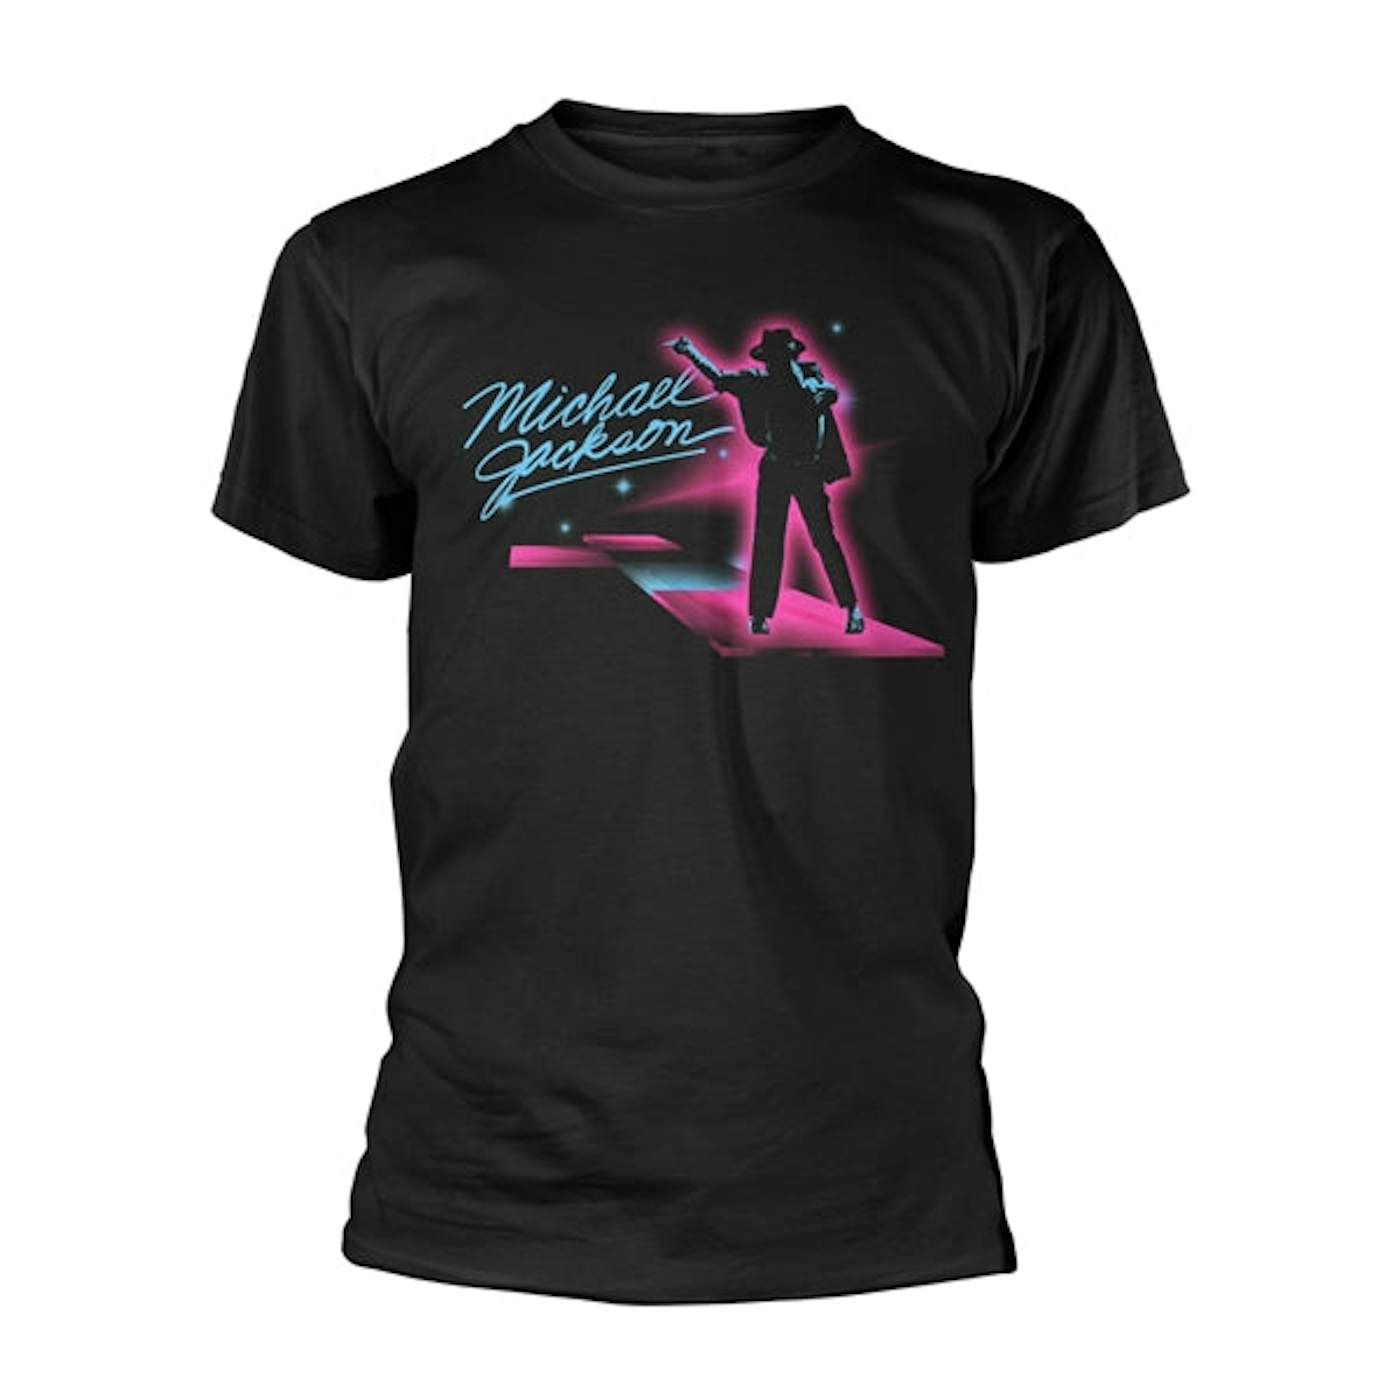 Michael Jackson Bad T-Shirt - Bing